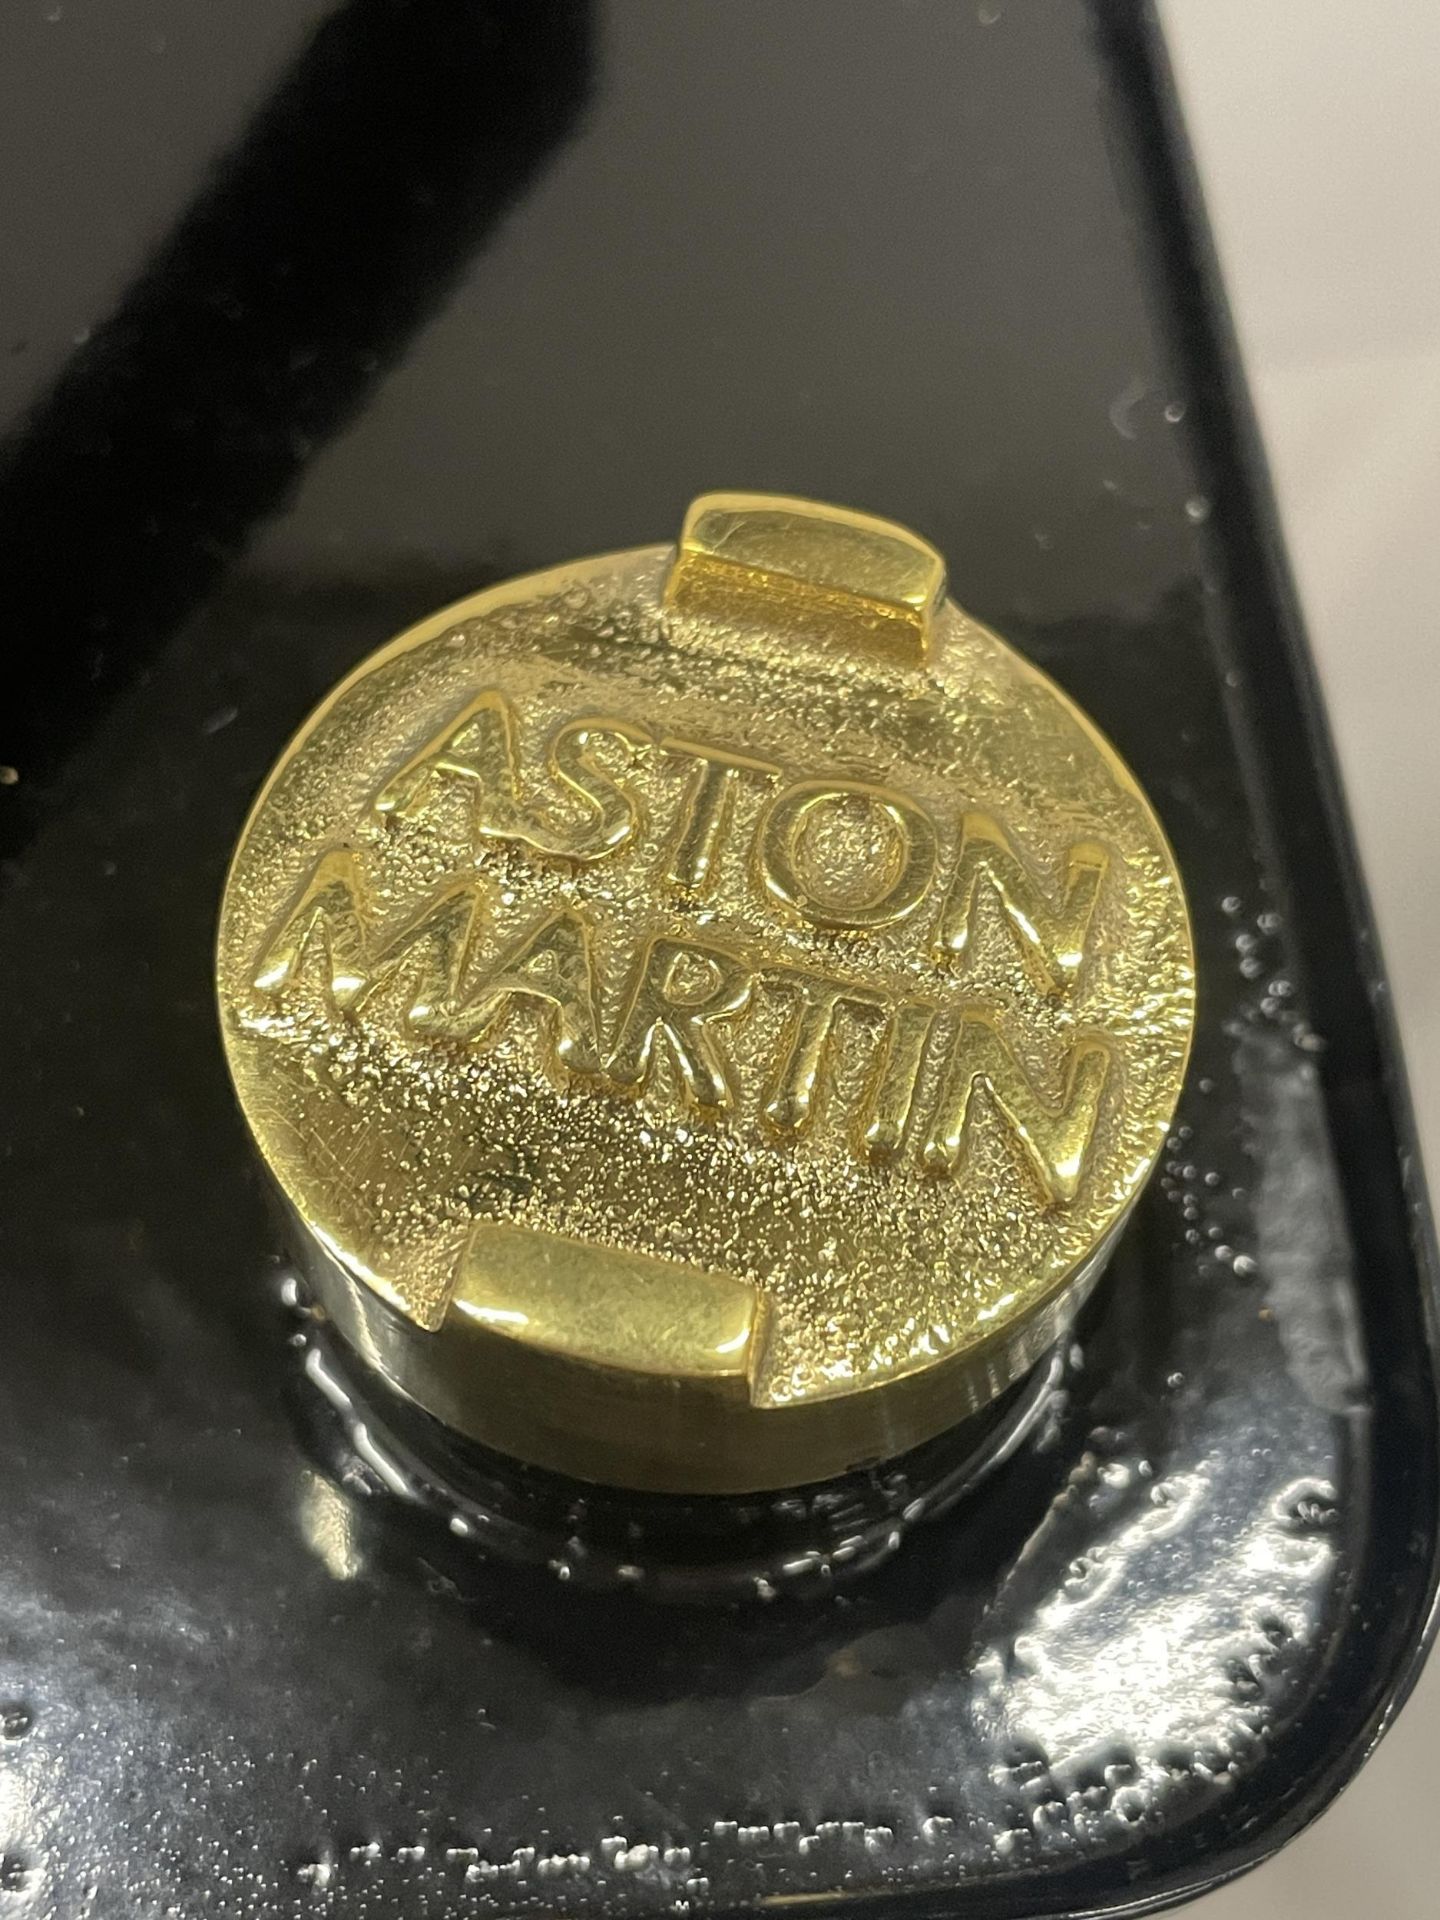 A BLACK ASTON MARTIN PETROL CAN - Image 3 of 3